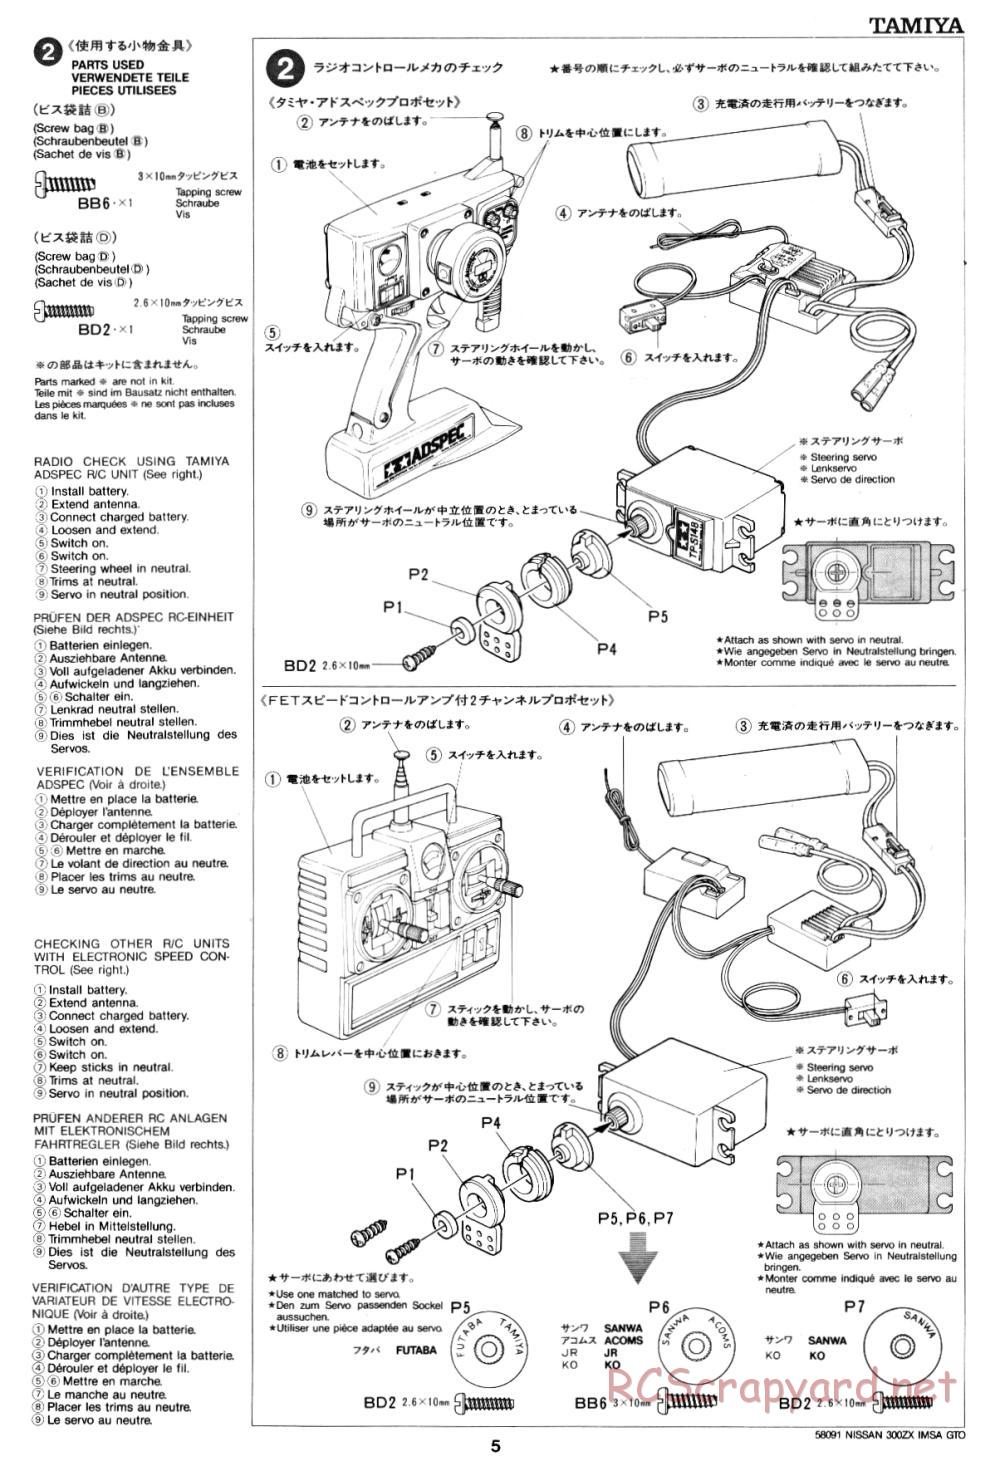 Tamiya - Nissan 300ZX IMSA GTO - 58091 - Manual - Page 5